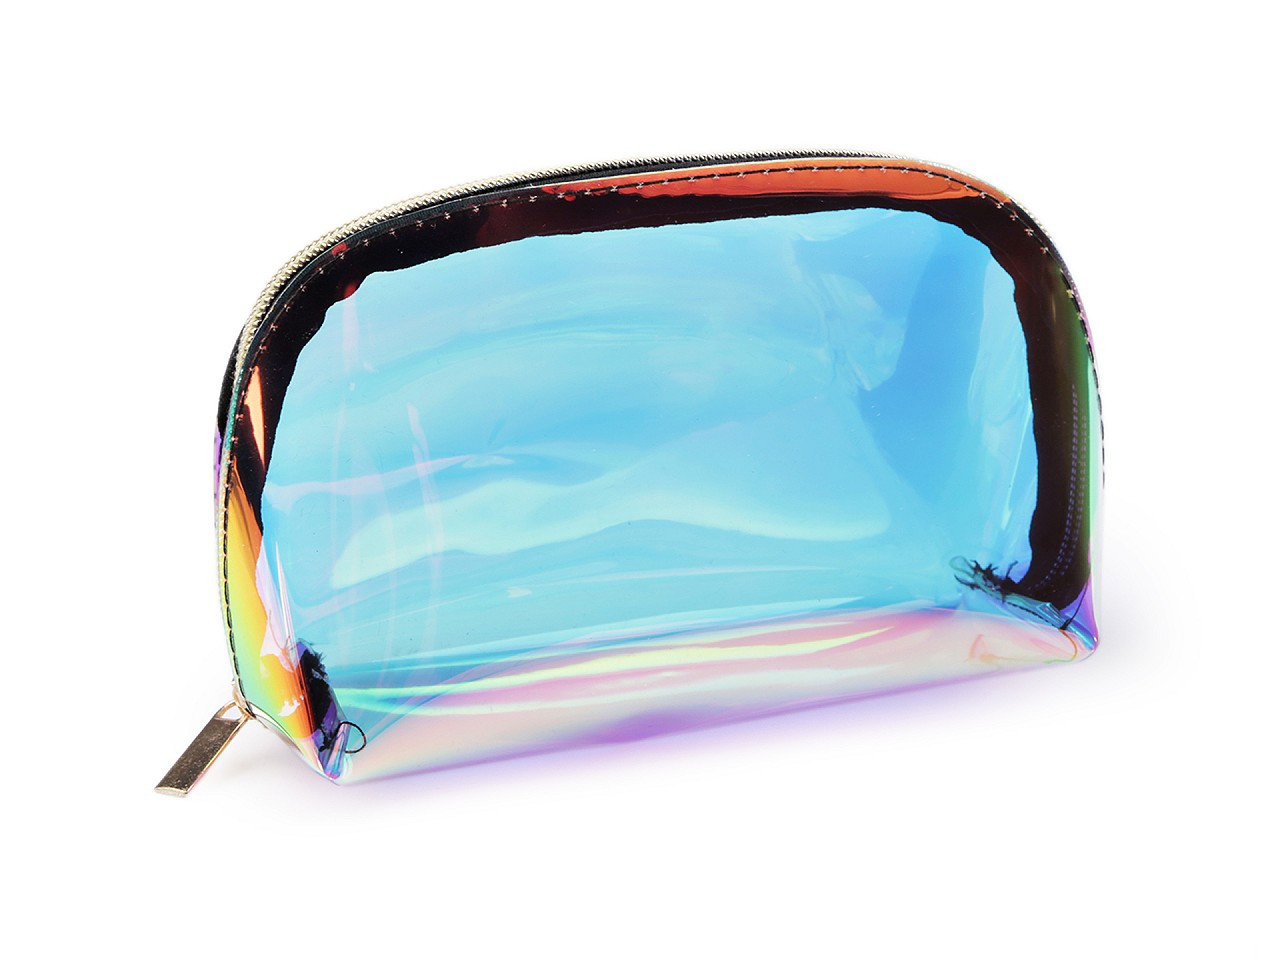 Pouzdro / kosmetická taška holografická, barva 2 (19 cm) transparent